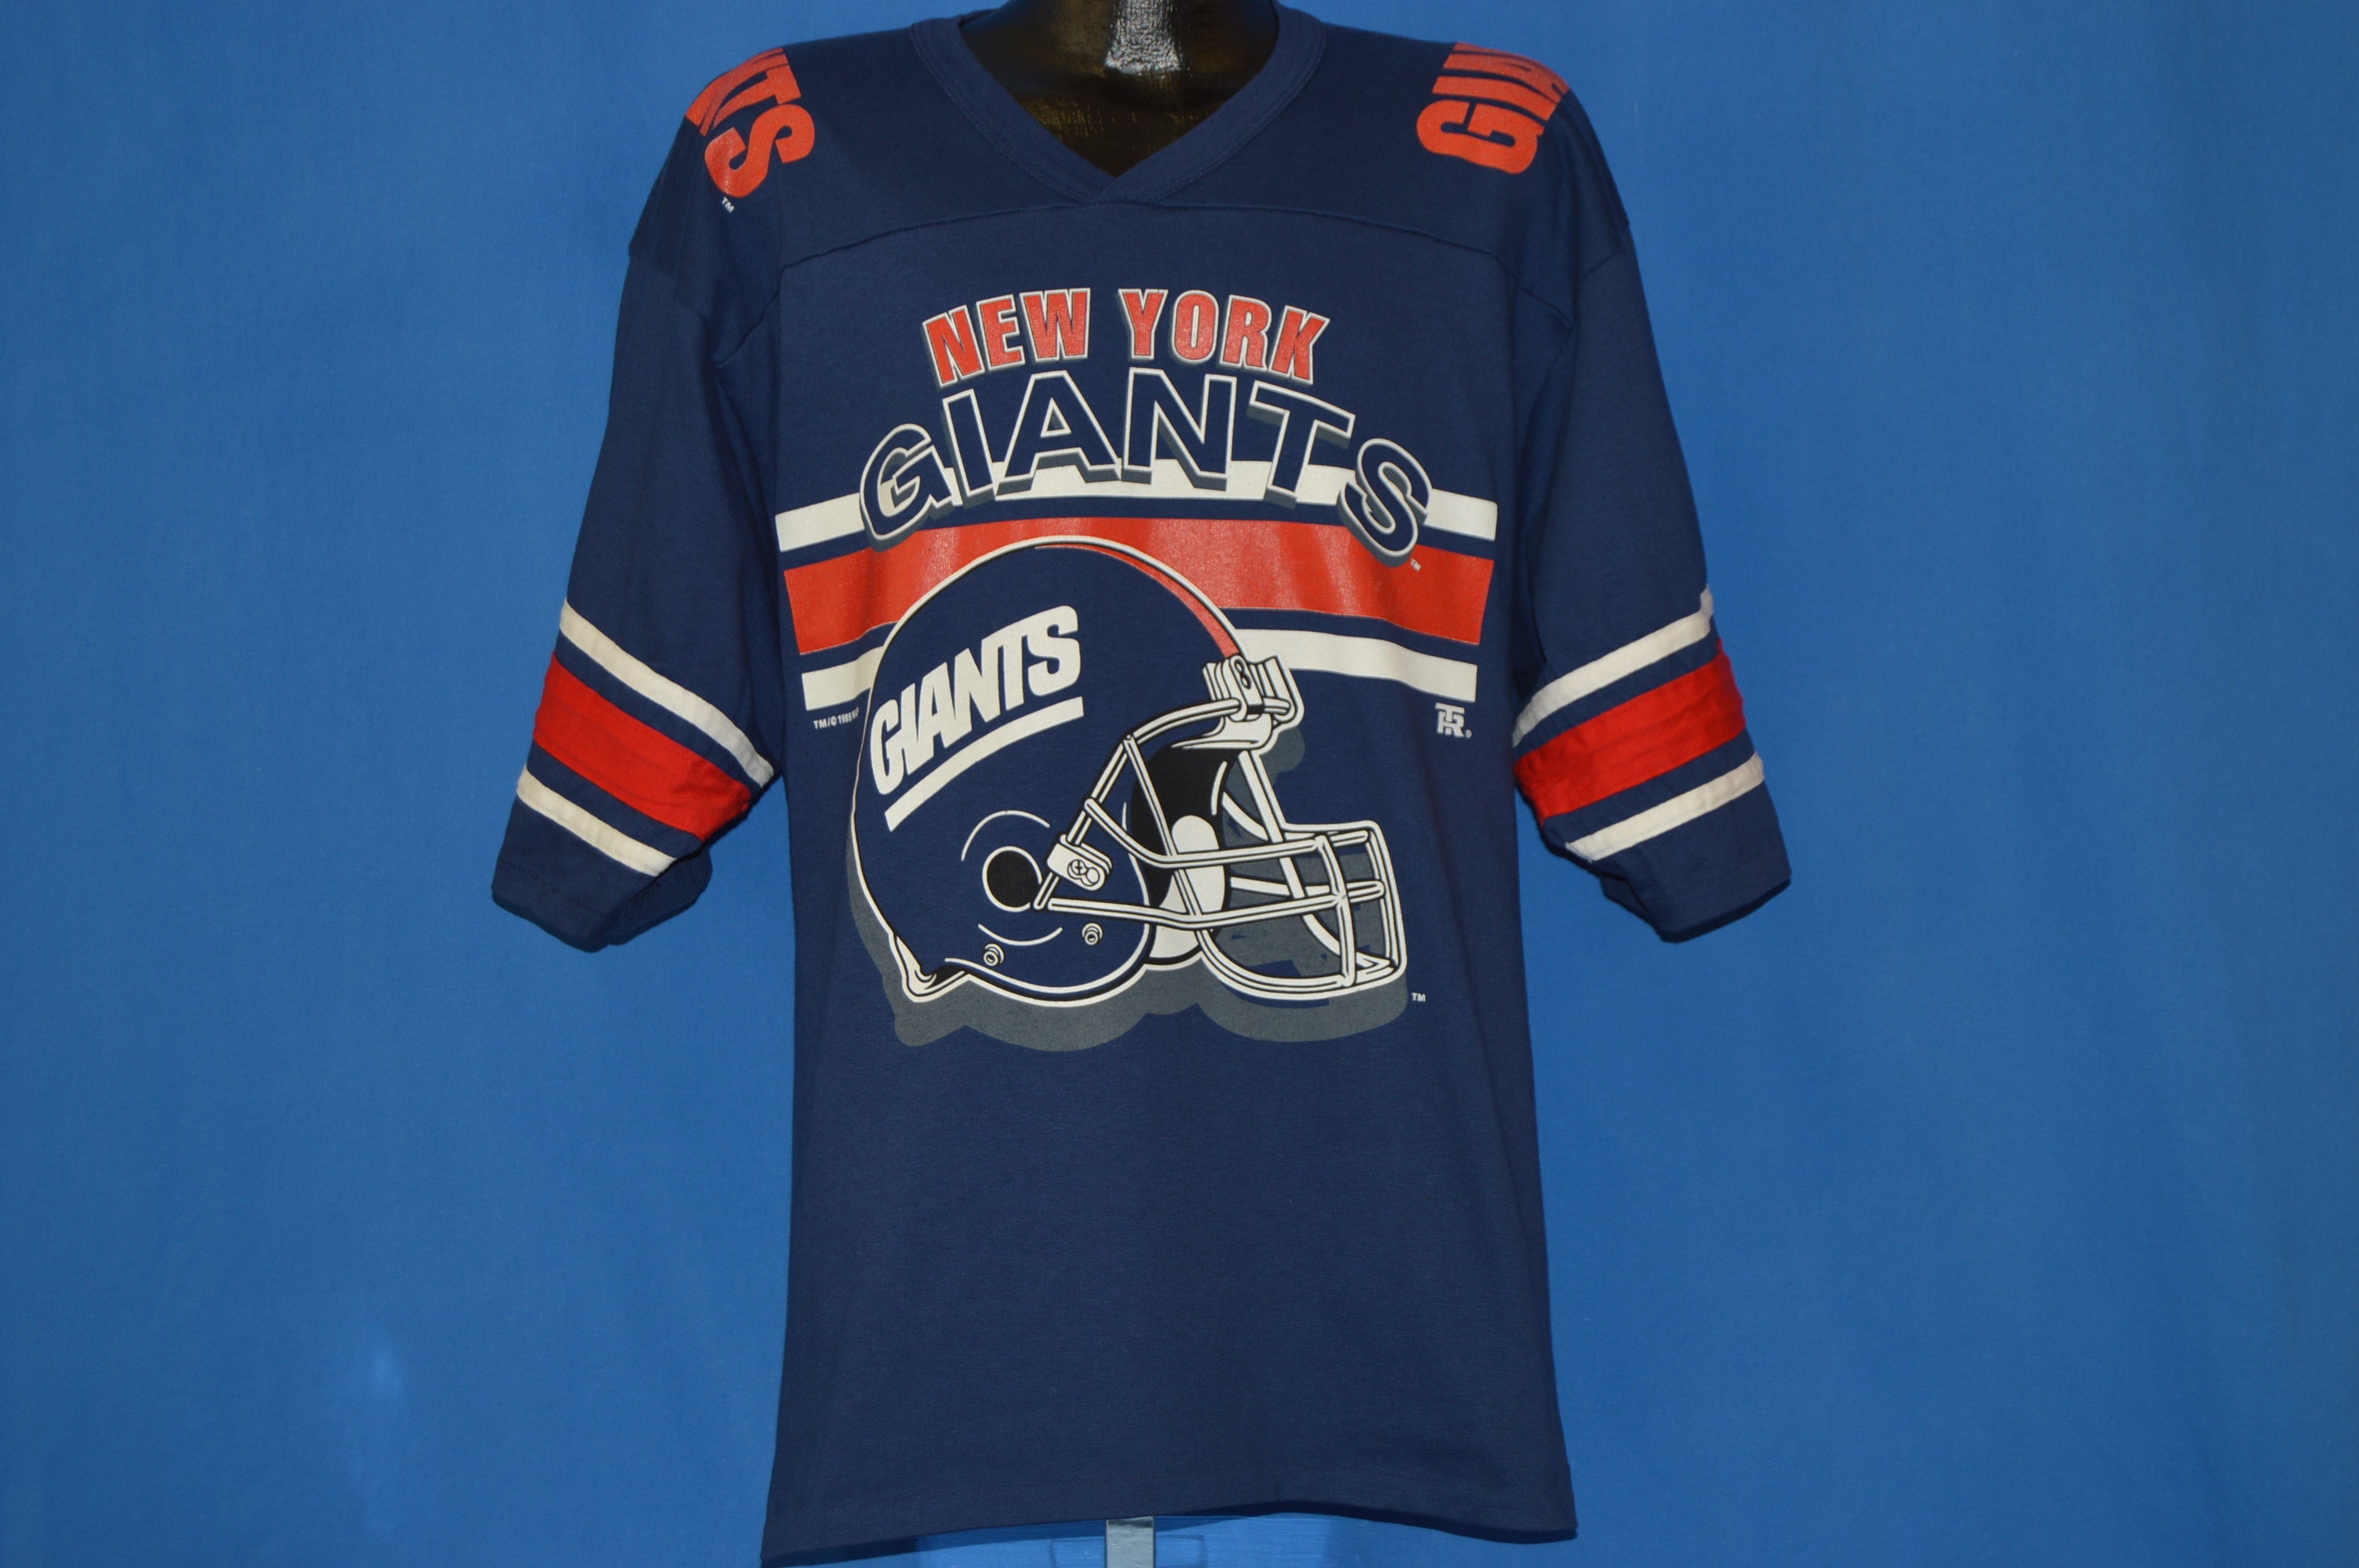 vintage new york giants jersey